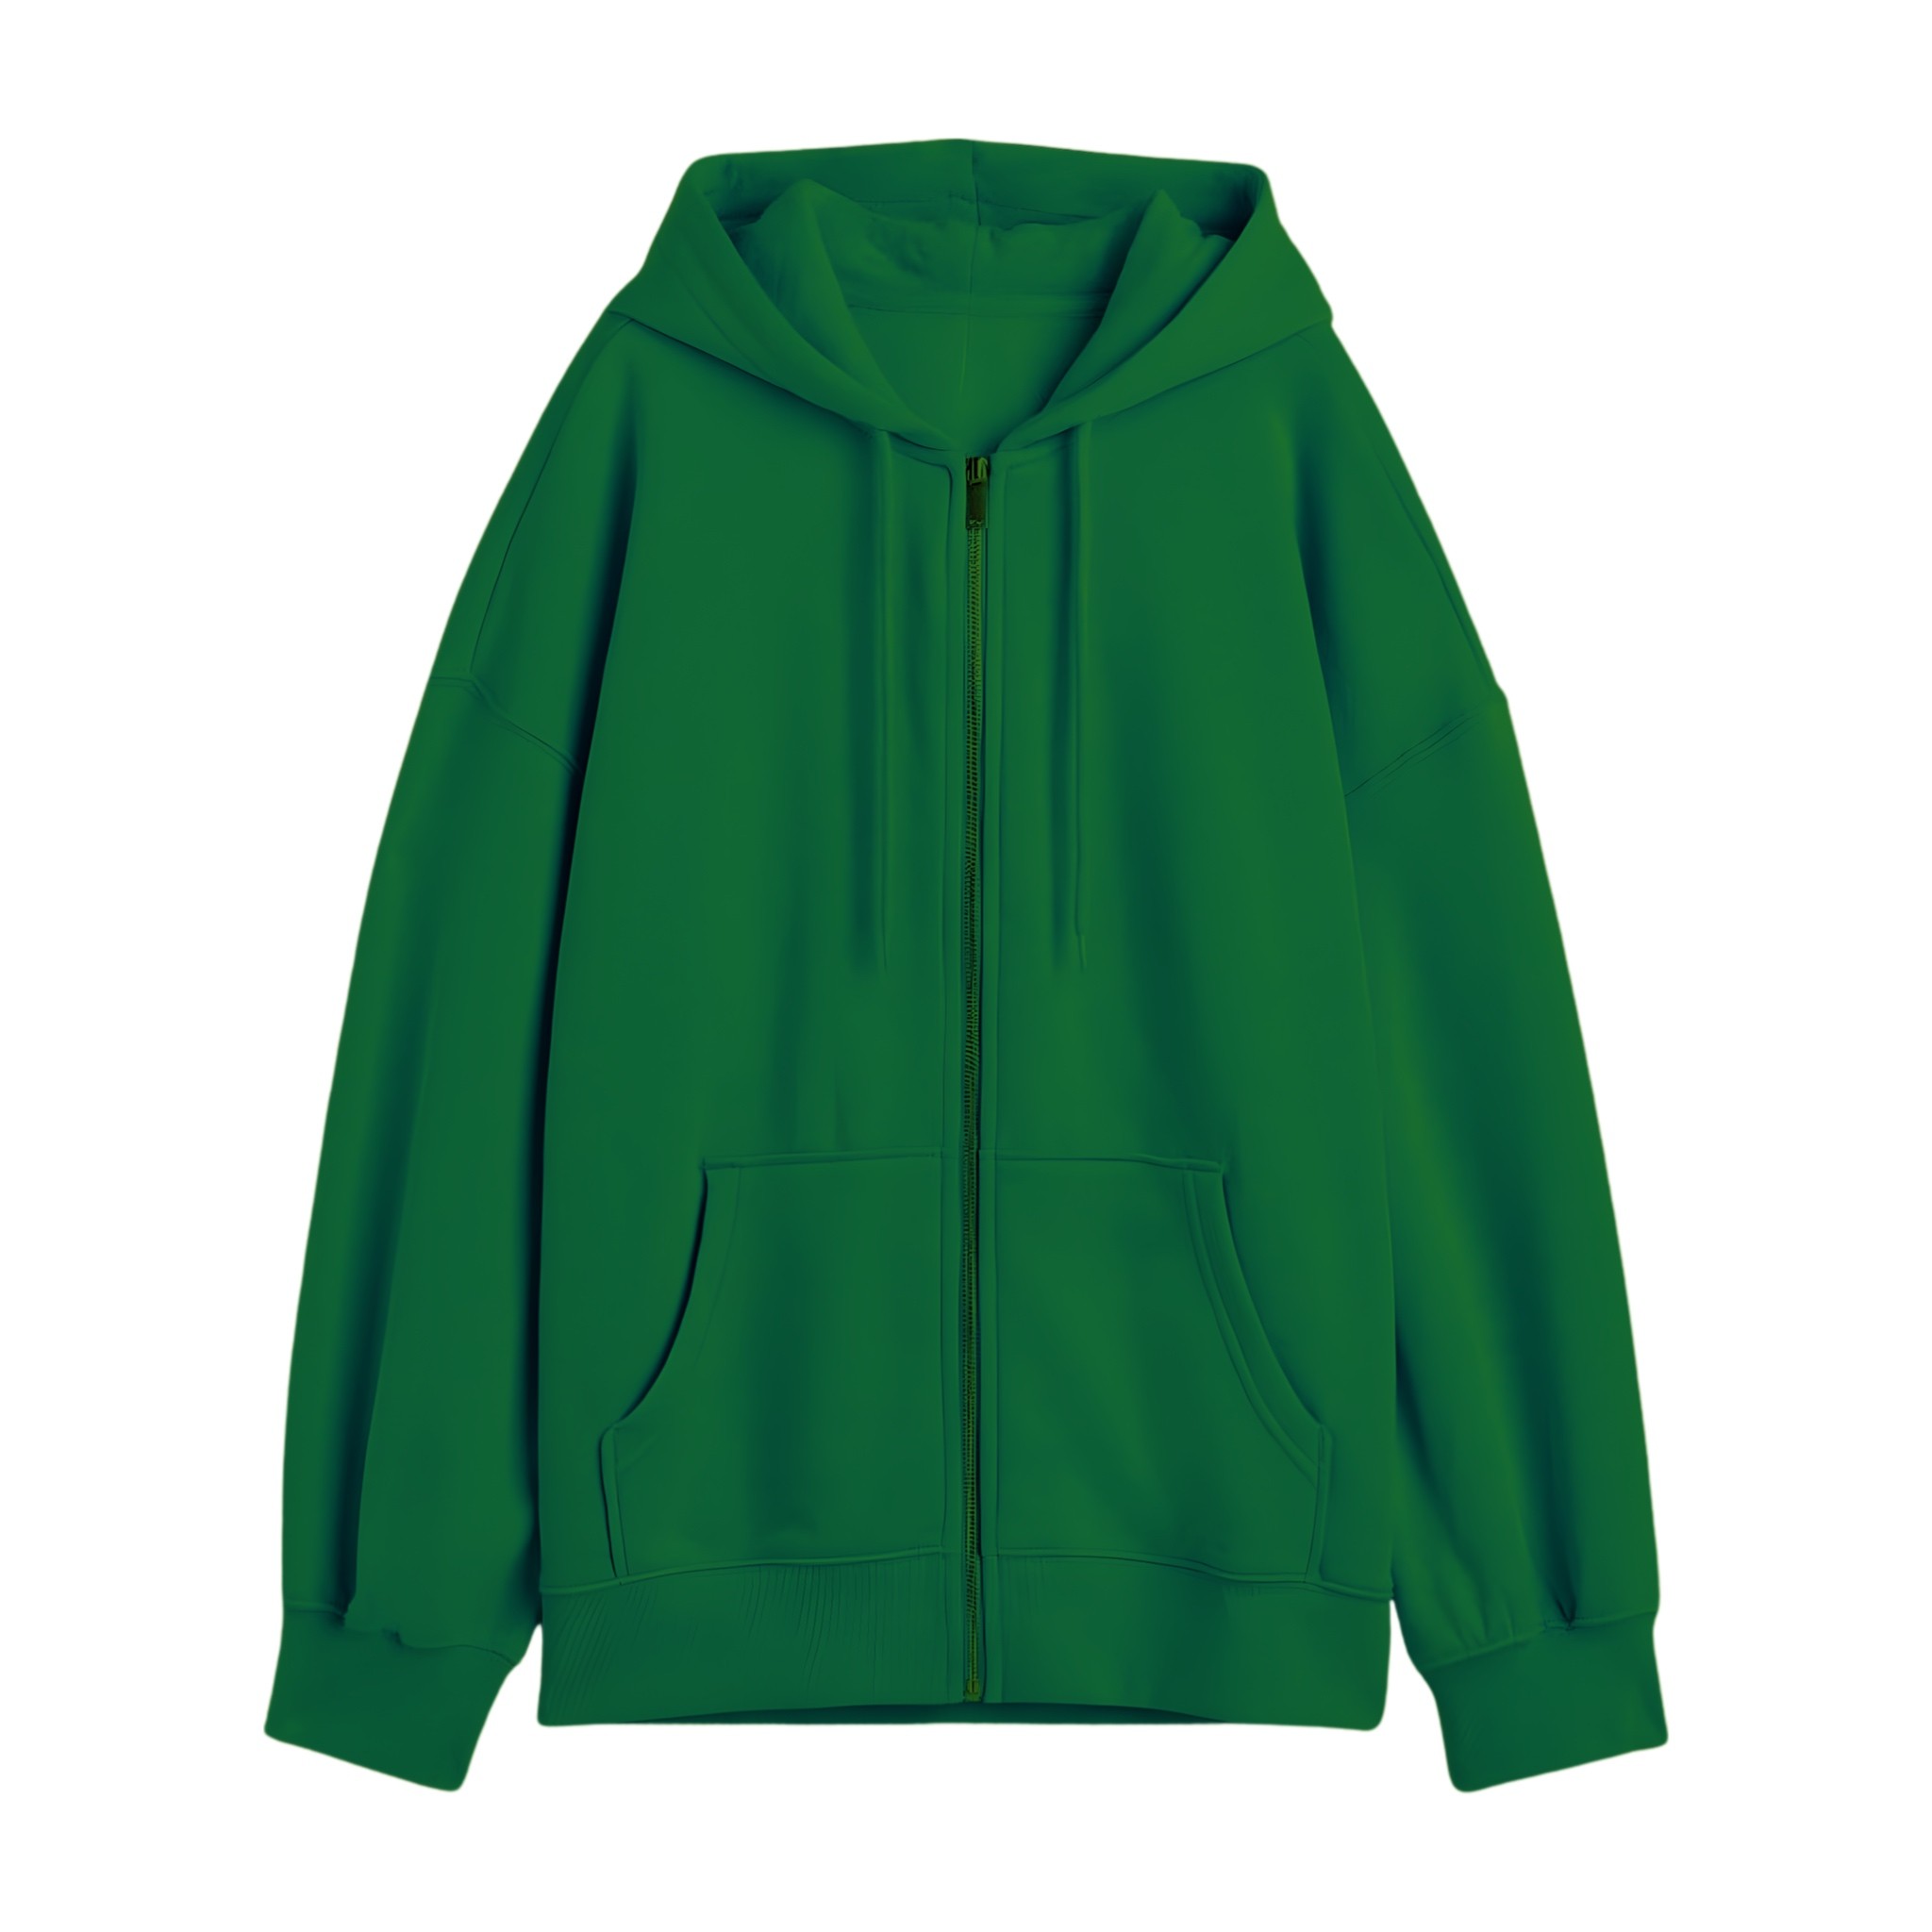 GREEN zipped hoodie